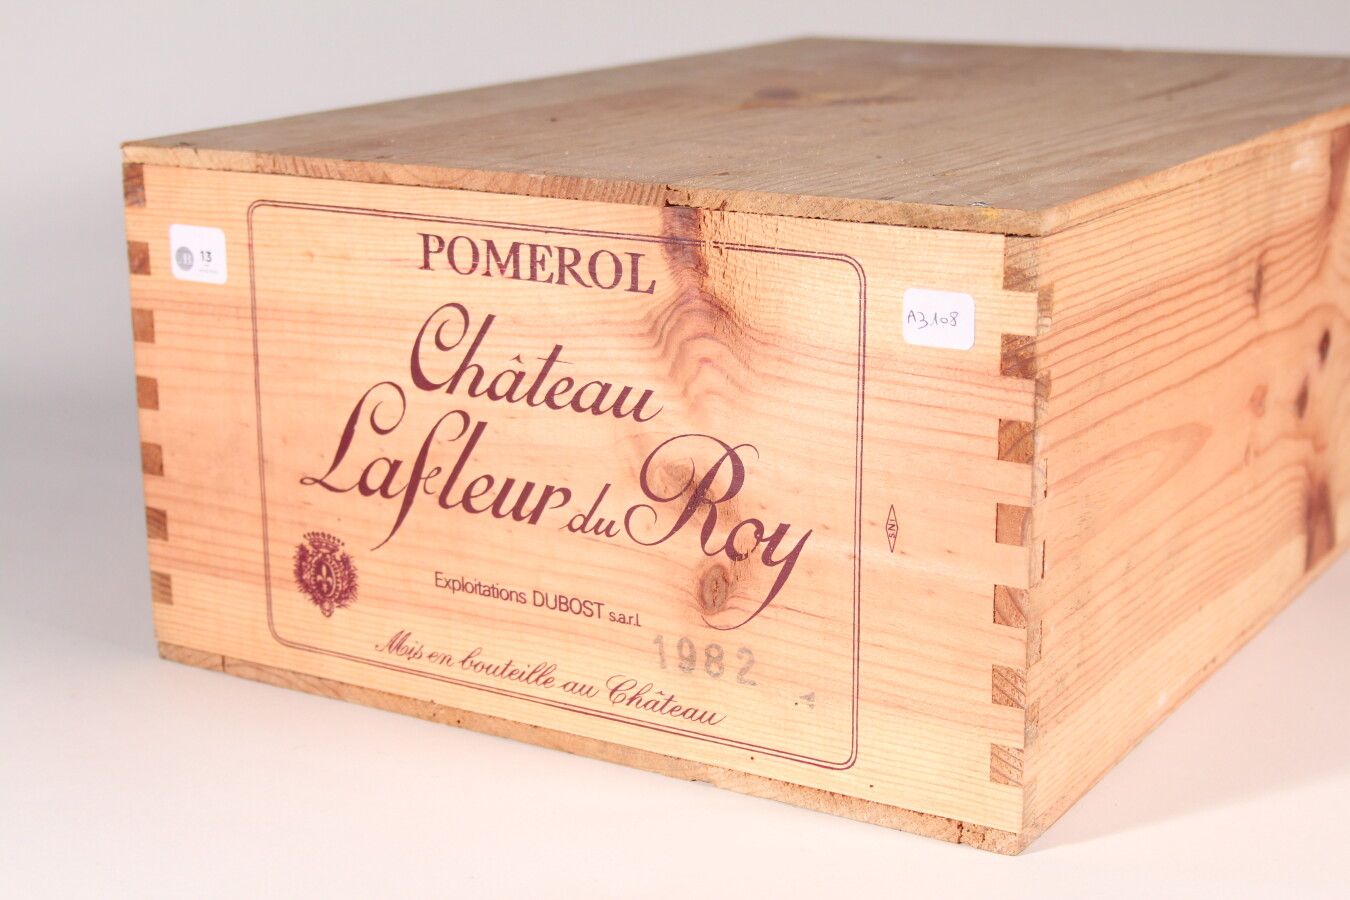 Null 1982 - Château La Fleur du Roy

Pomerol rosso - 12 bottiglie CBO